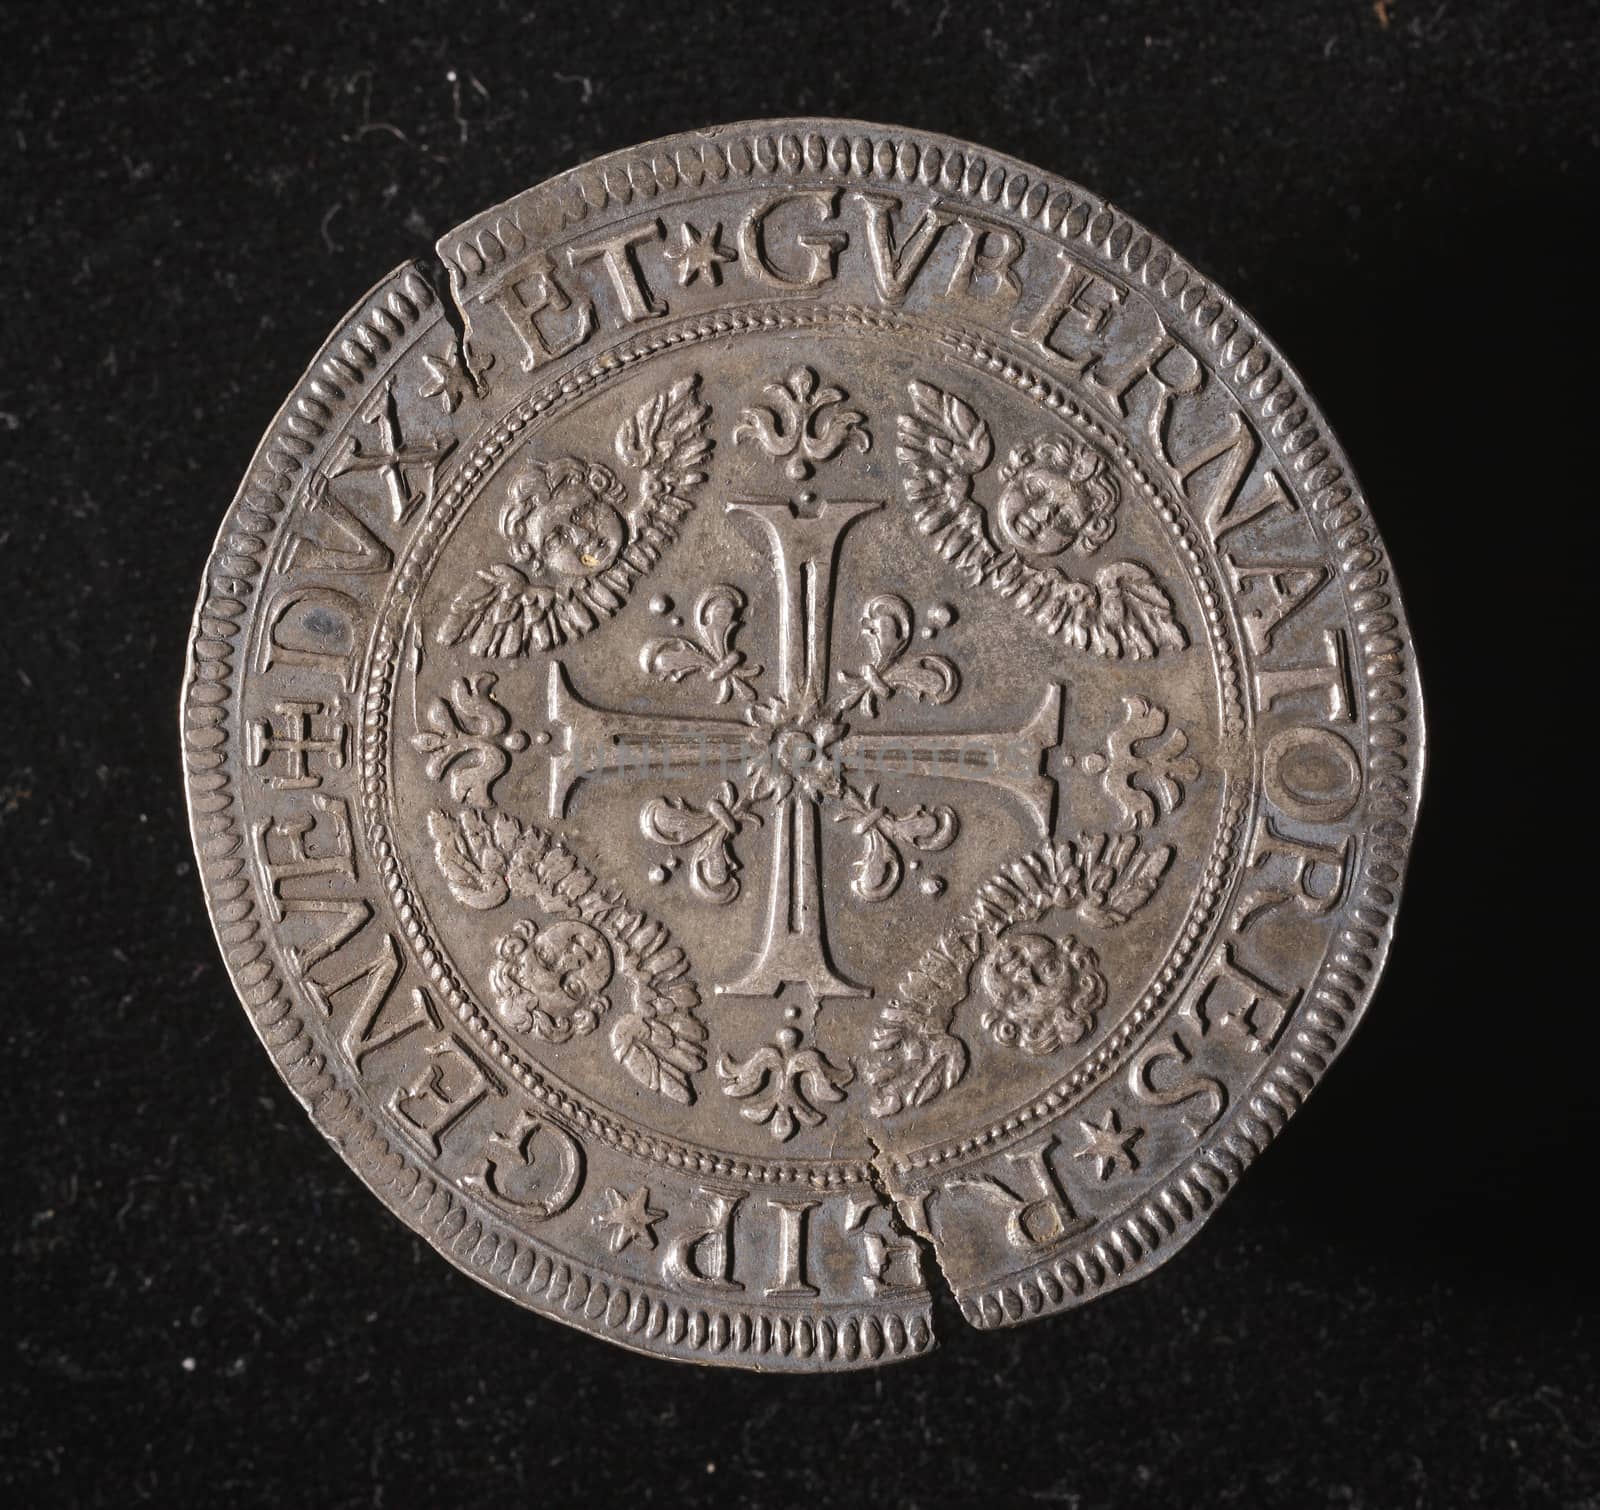 scudo largo - recto ID008 - ancient silver coin of republic of genoa italy